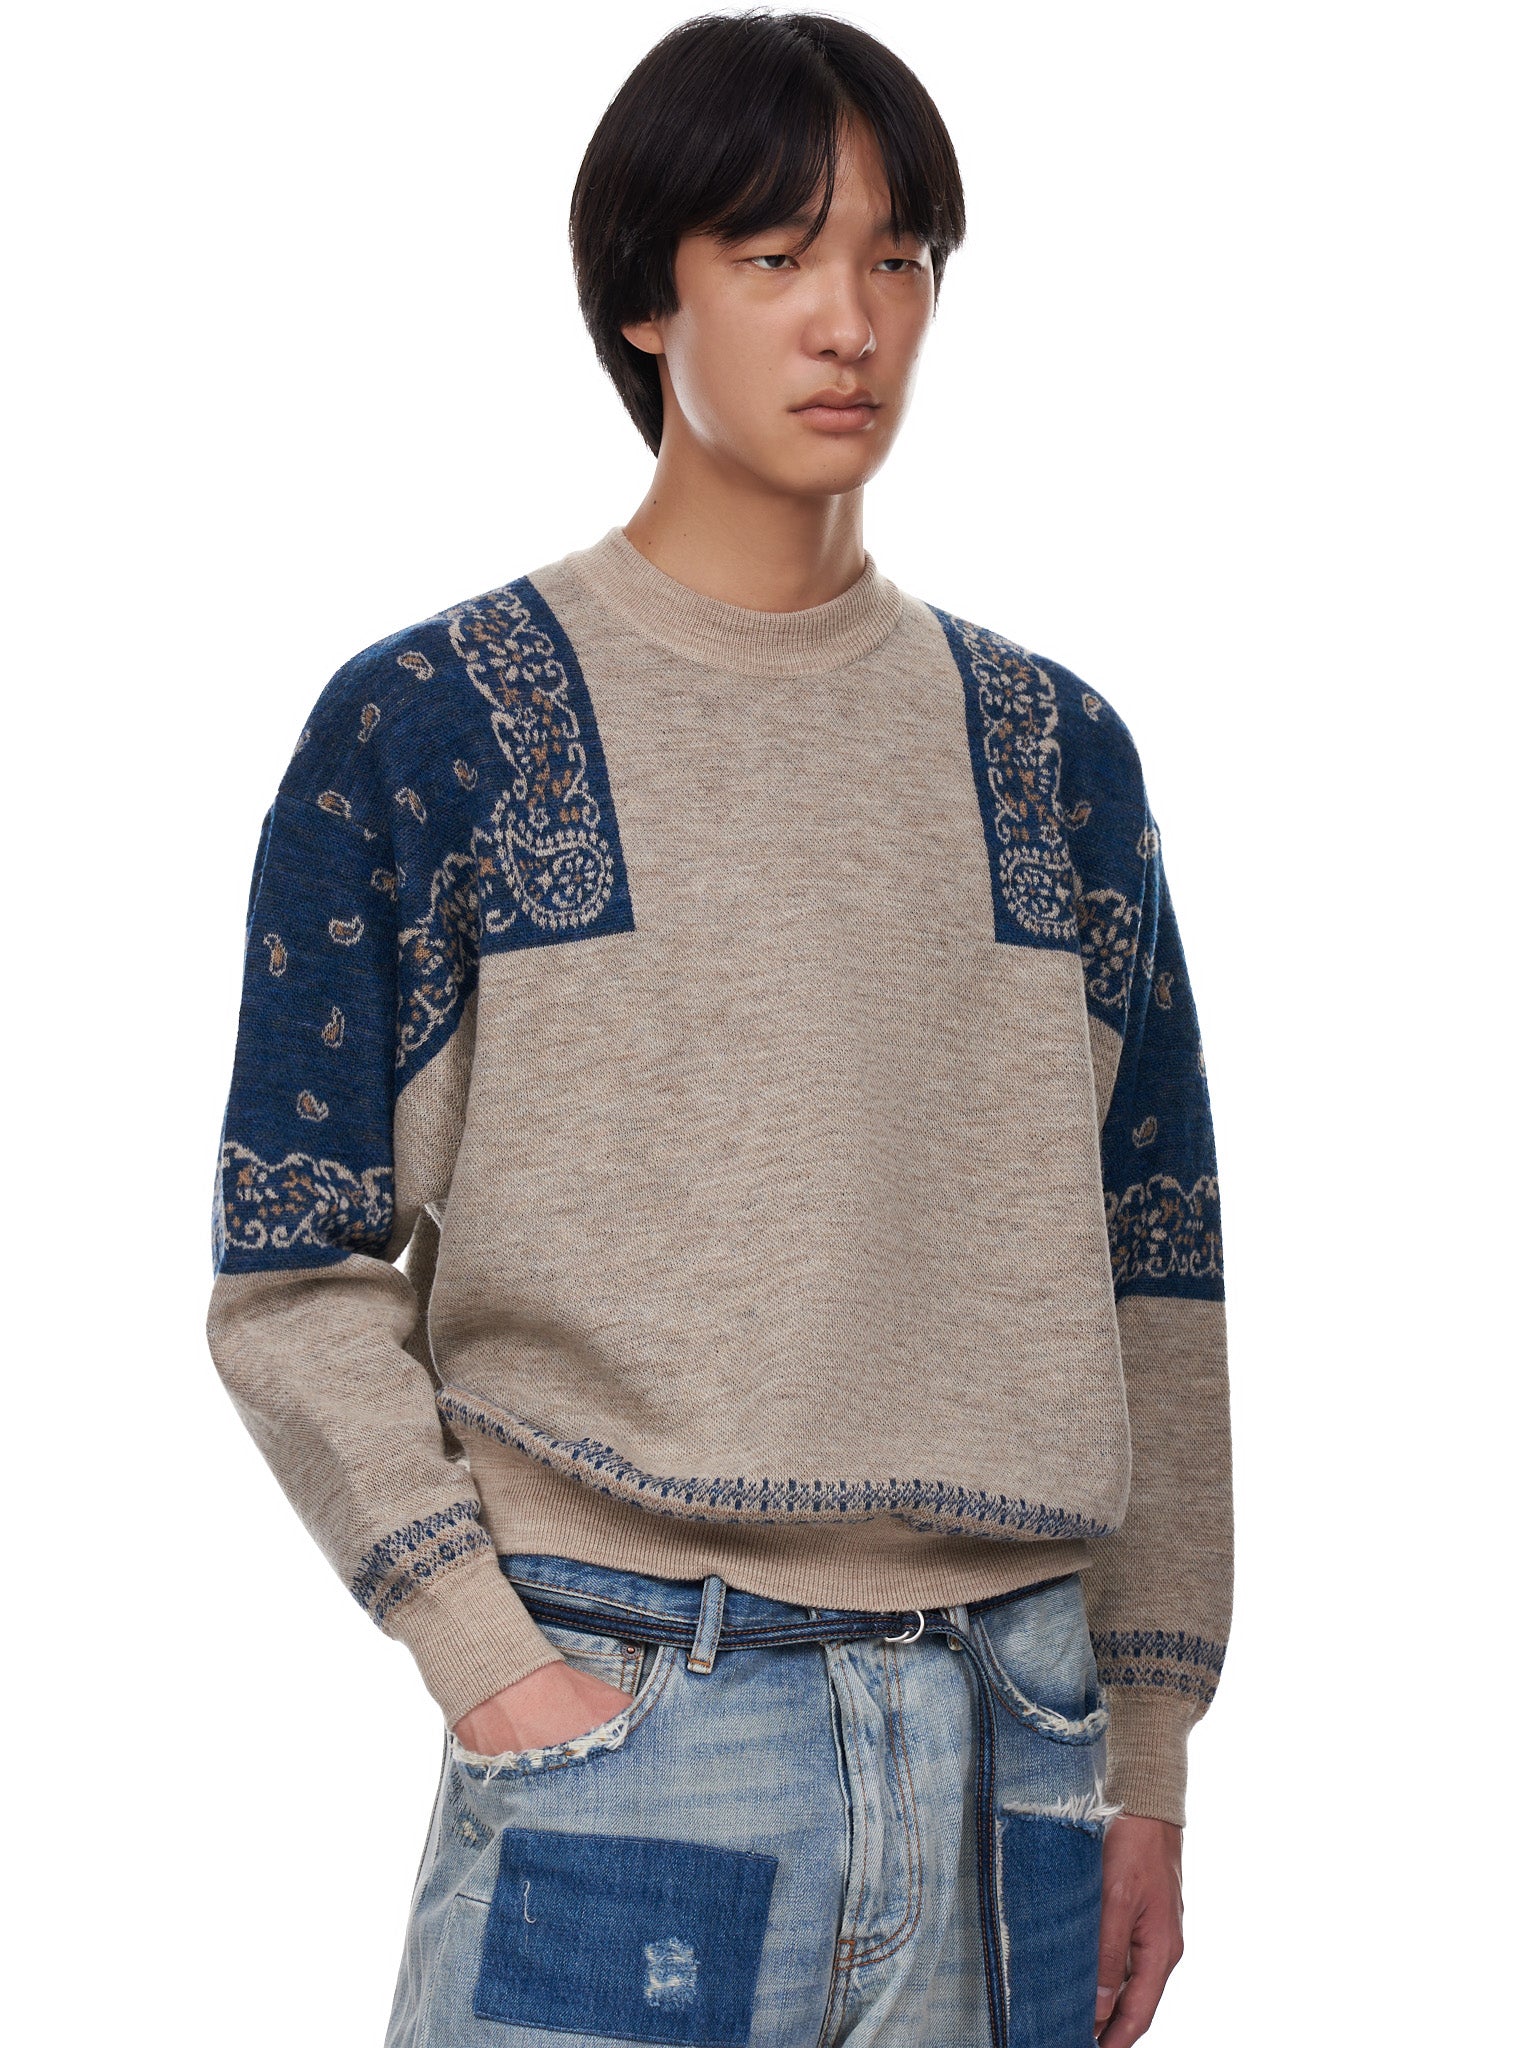 Kapital Bandana Sweater | H. Lorenzo - detail 1